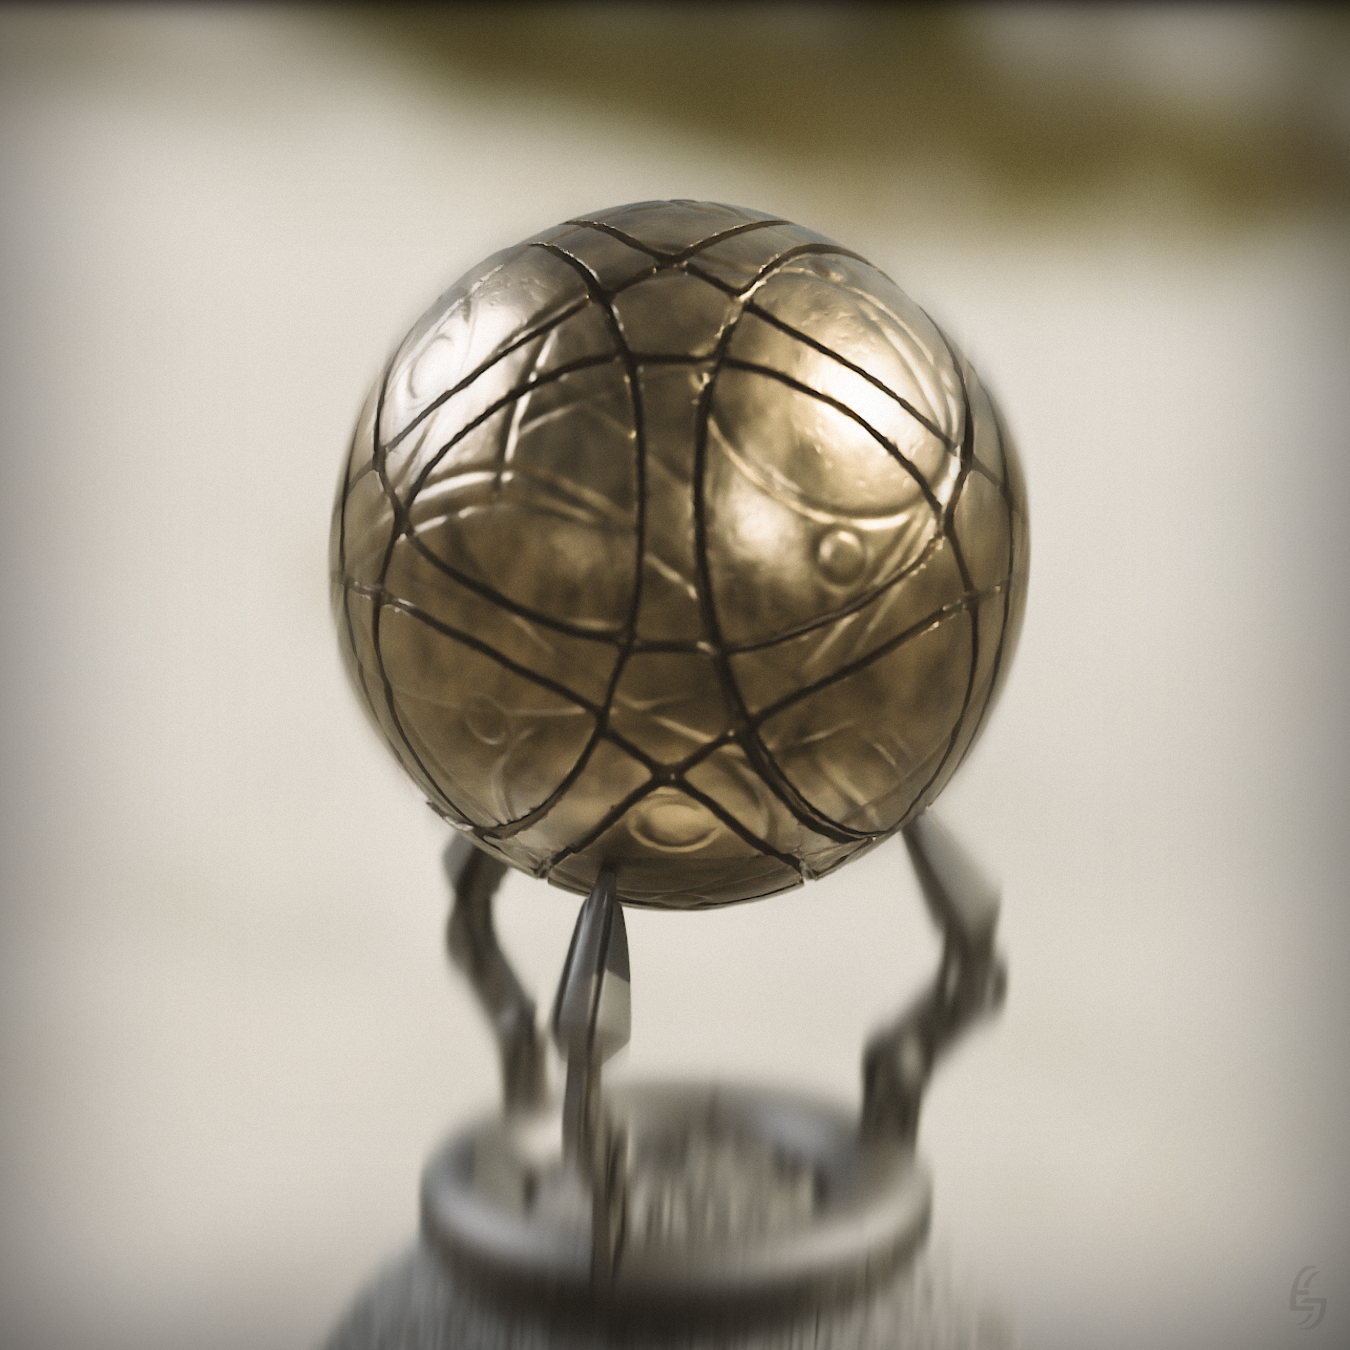 treasure planet map ball design